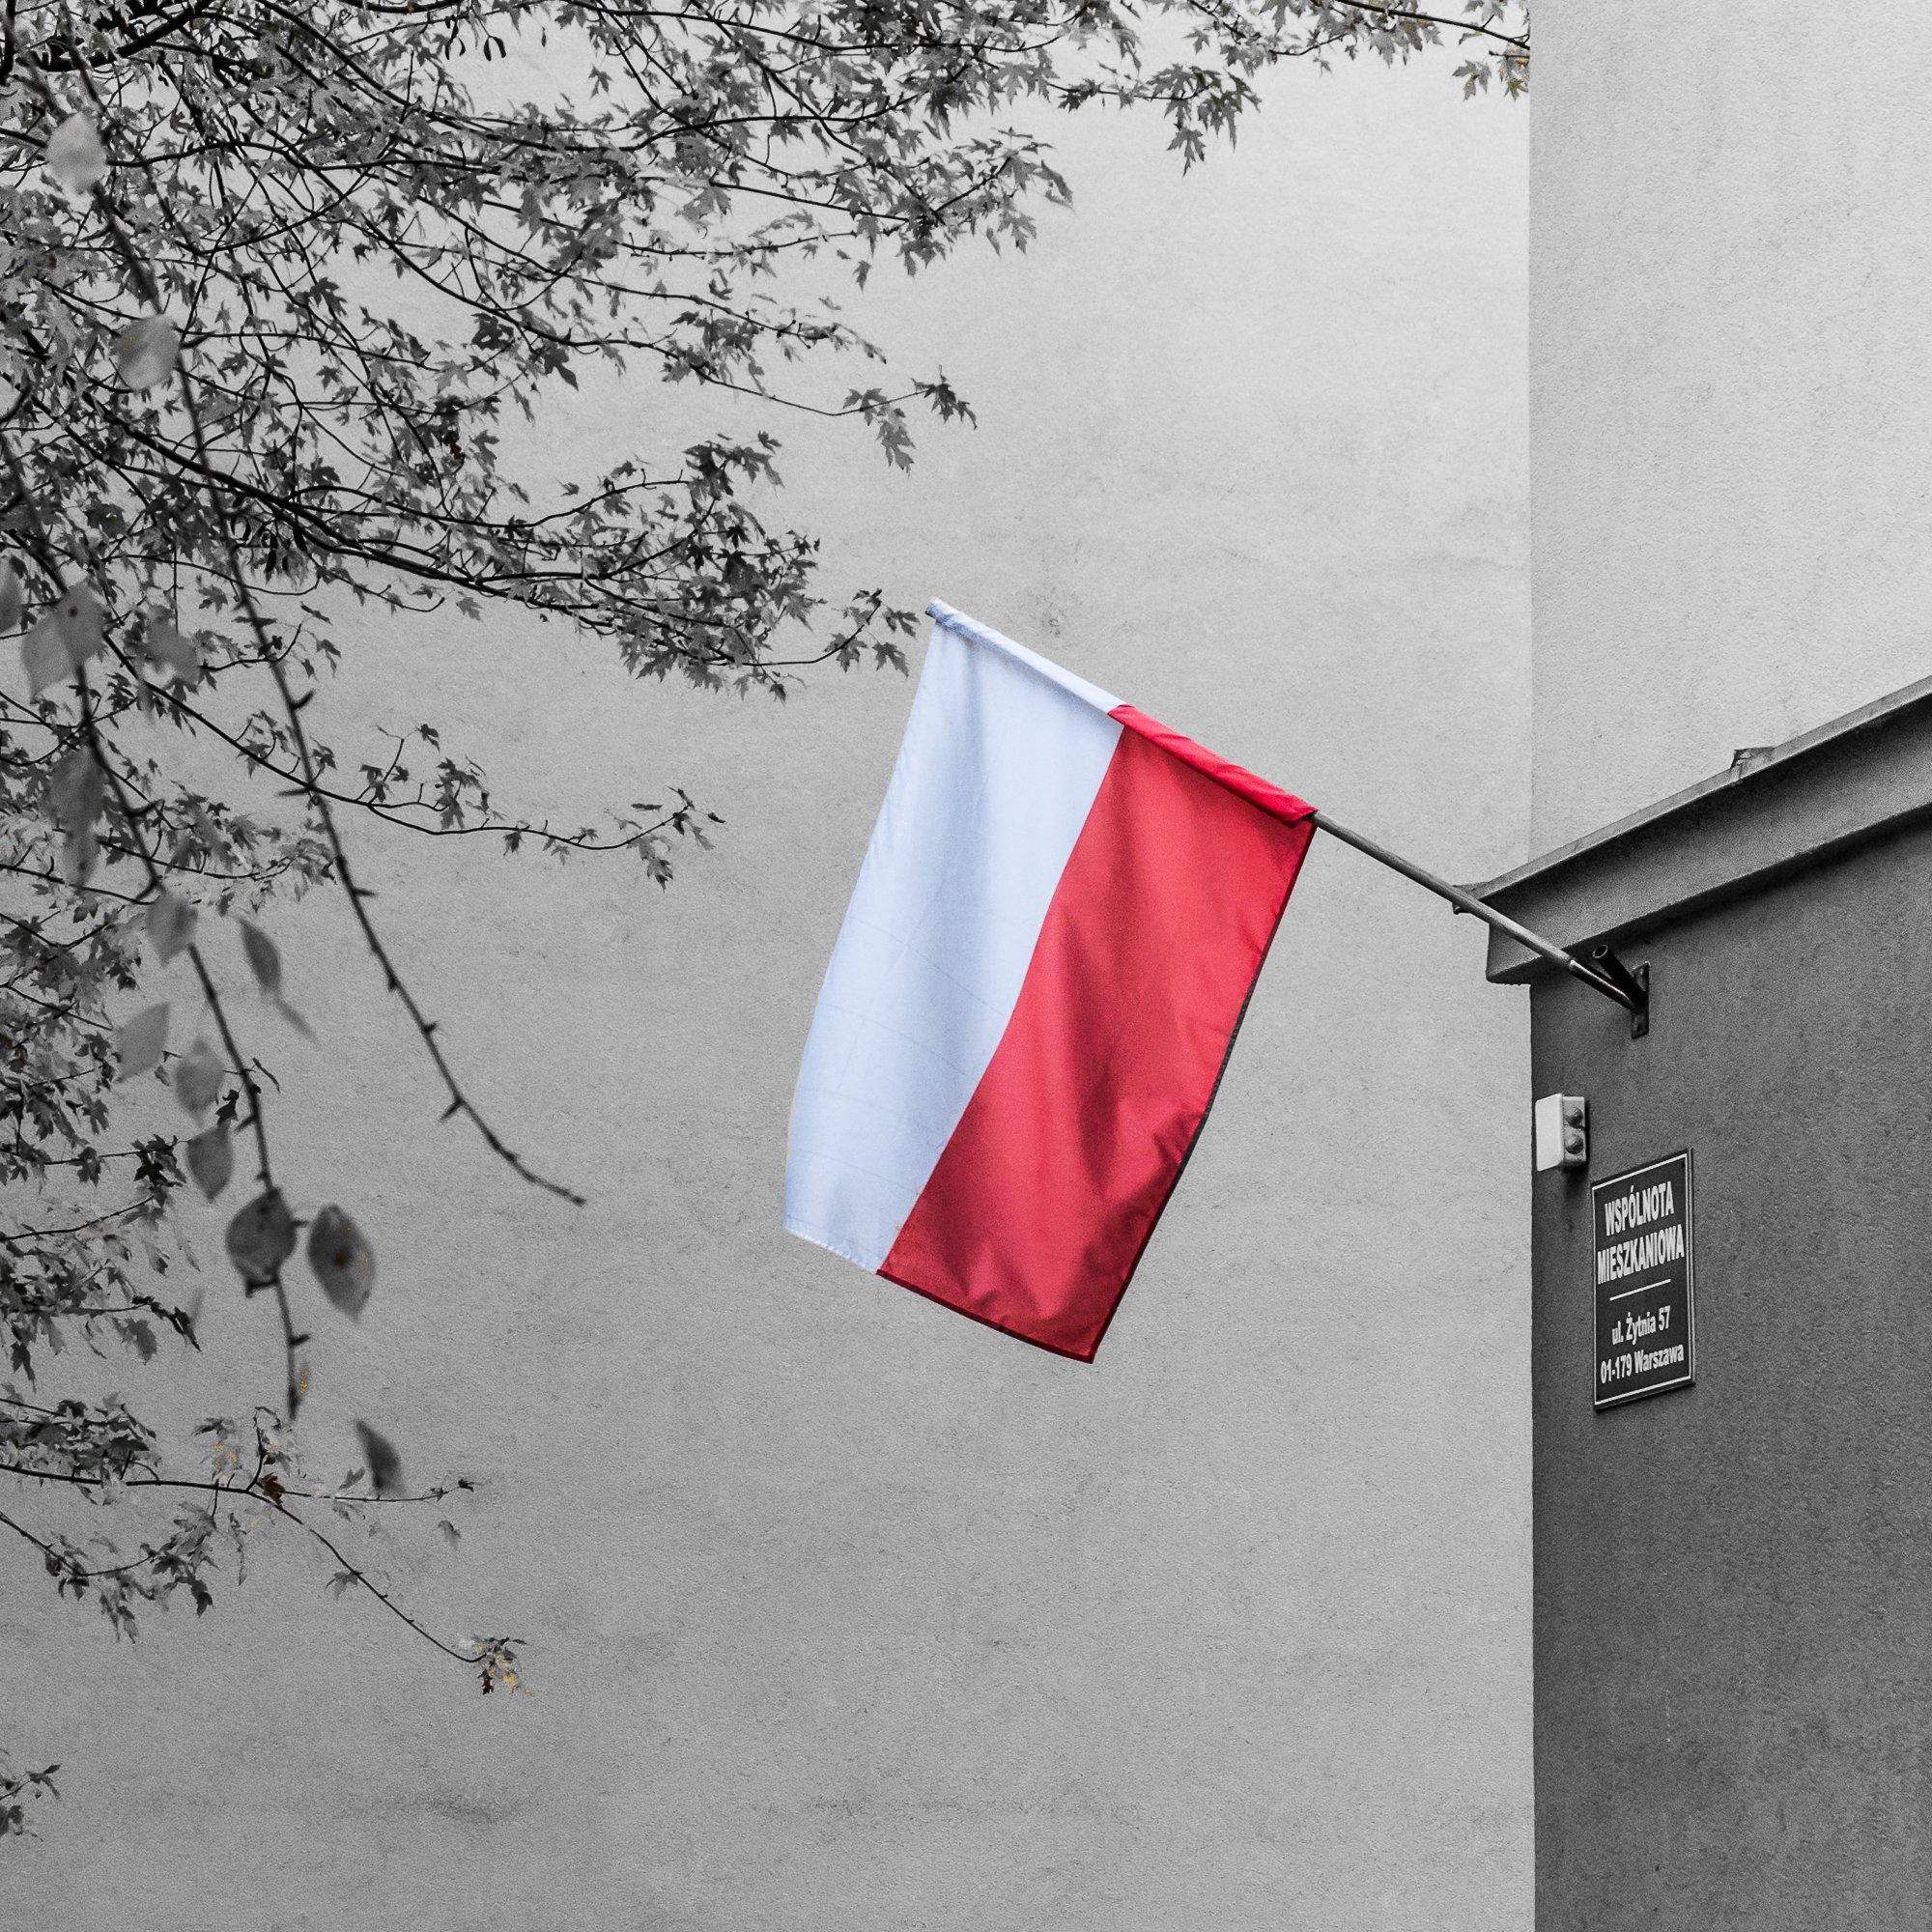 Adam Mazek Photography. Warsaw (Warszawa) 2017. Post: "Perspectives for my nation." Square. Polish flag. Minimalism.